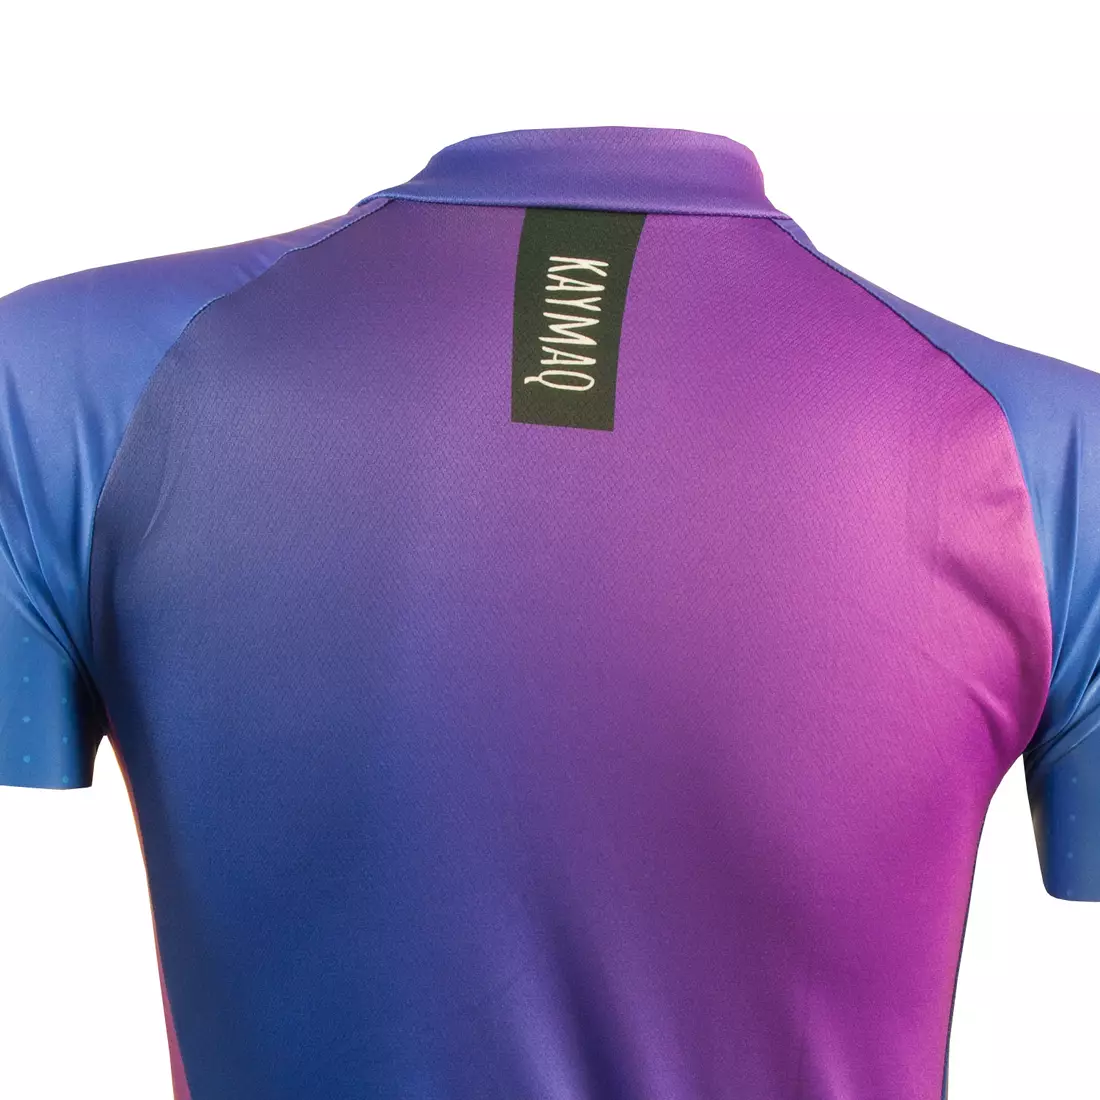 KAYMAQ DESIGN W1-W43 tricou de ciclism cu mâneci scurte pentru femei